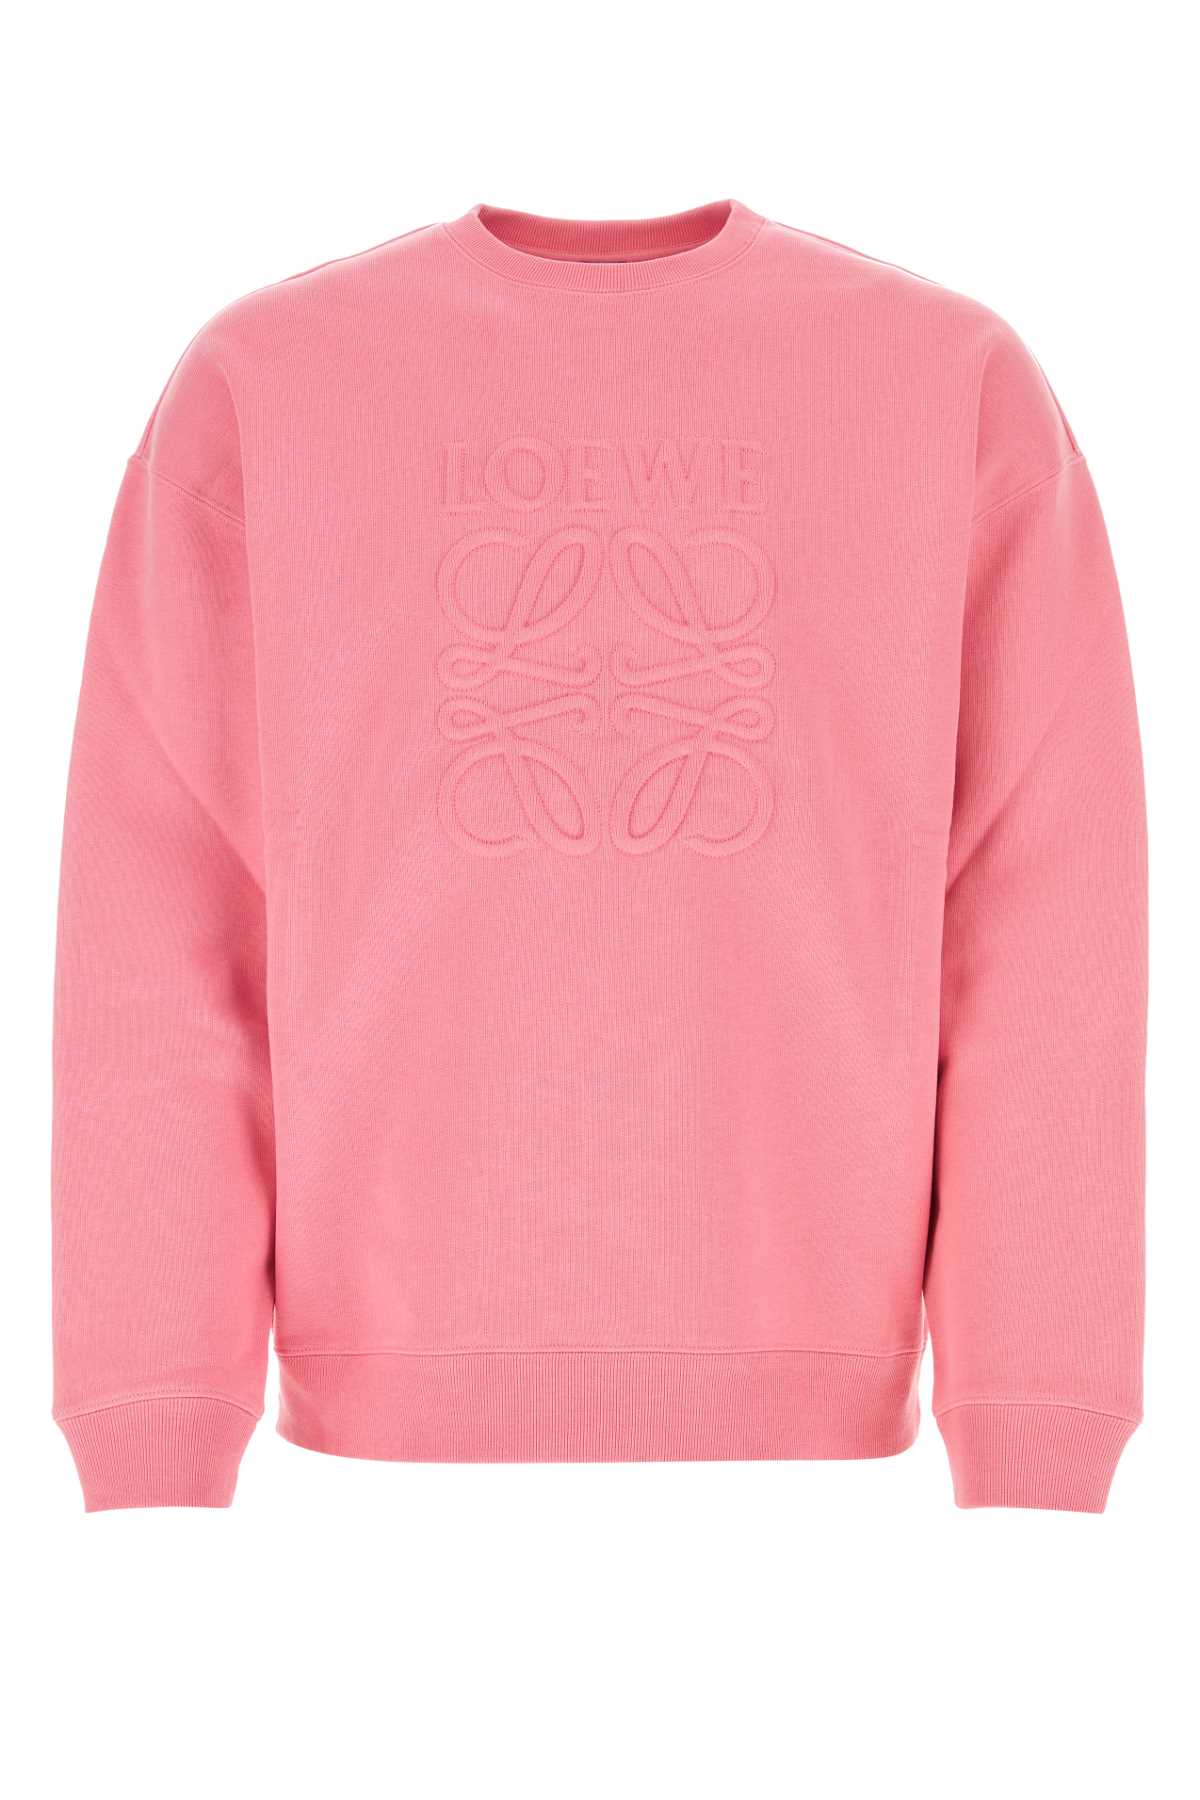 Loewe Pink Cotton Sweatshirt